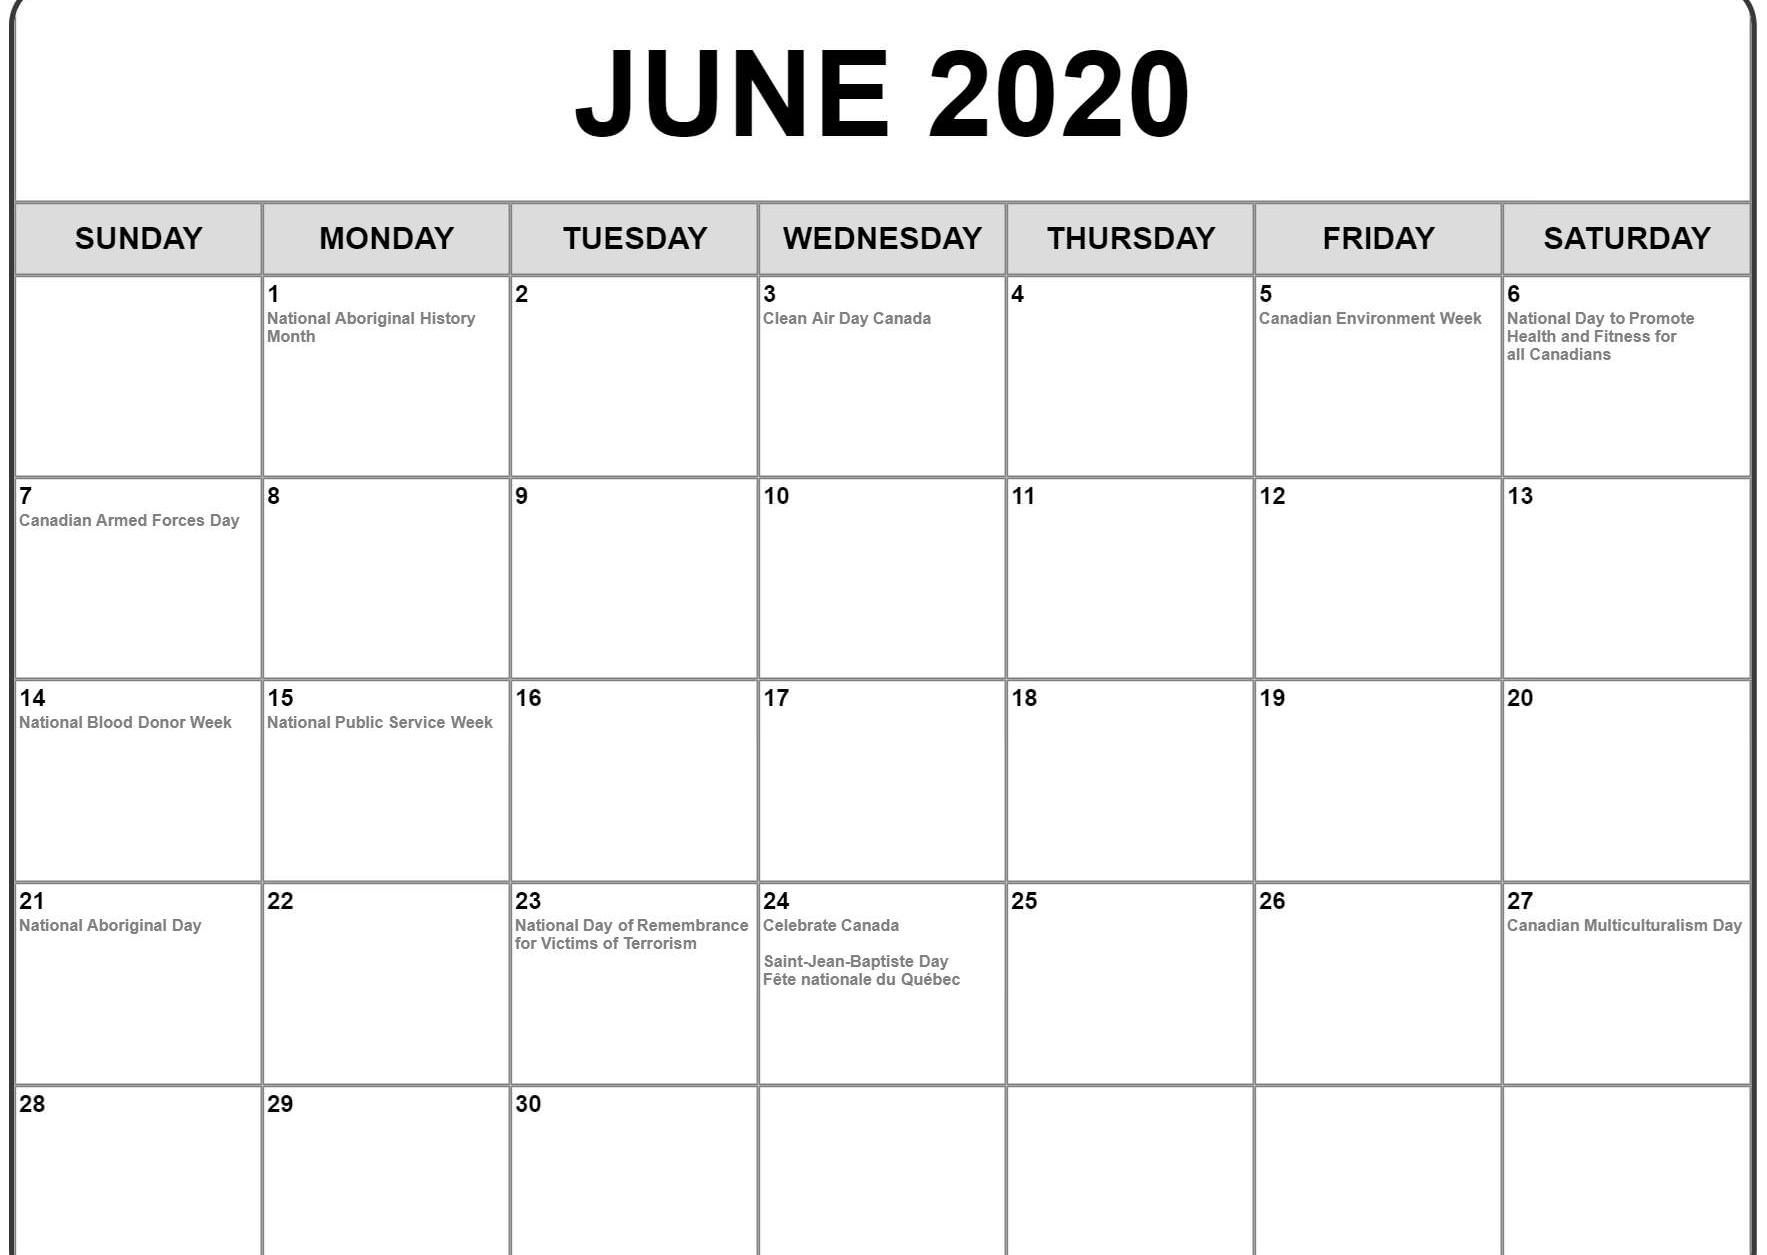 June 2020 Calendar With Holidays | Monthly Calendar Template June 2020 Calendar With Holidays